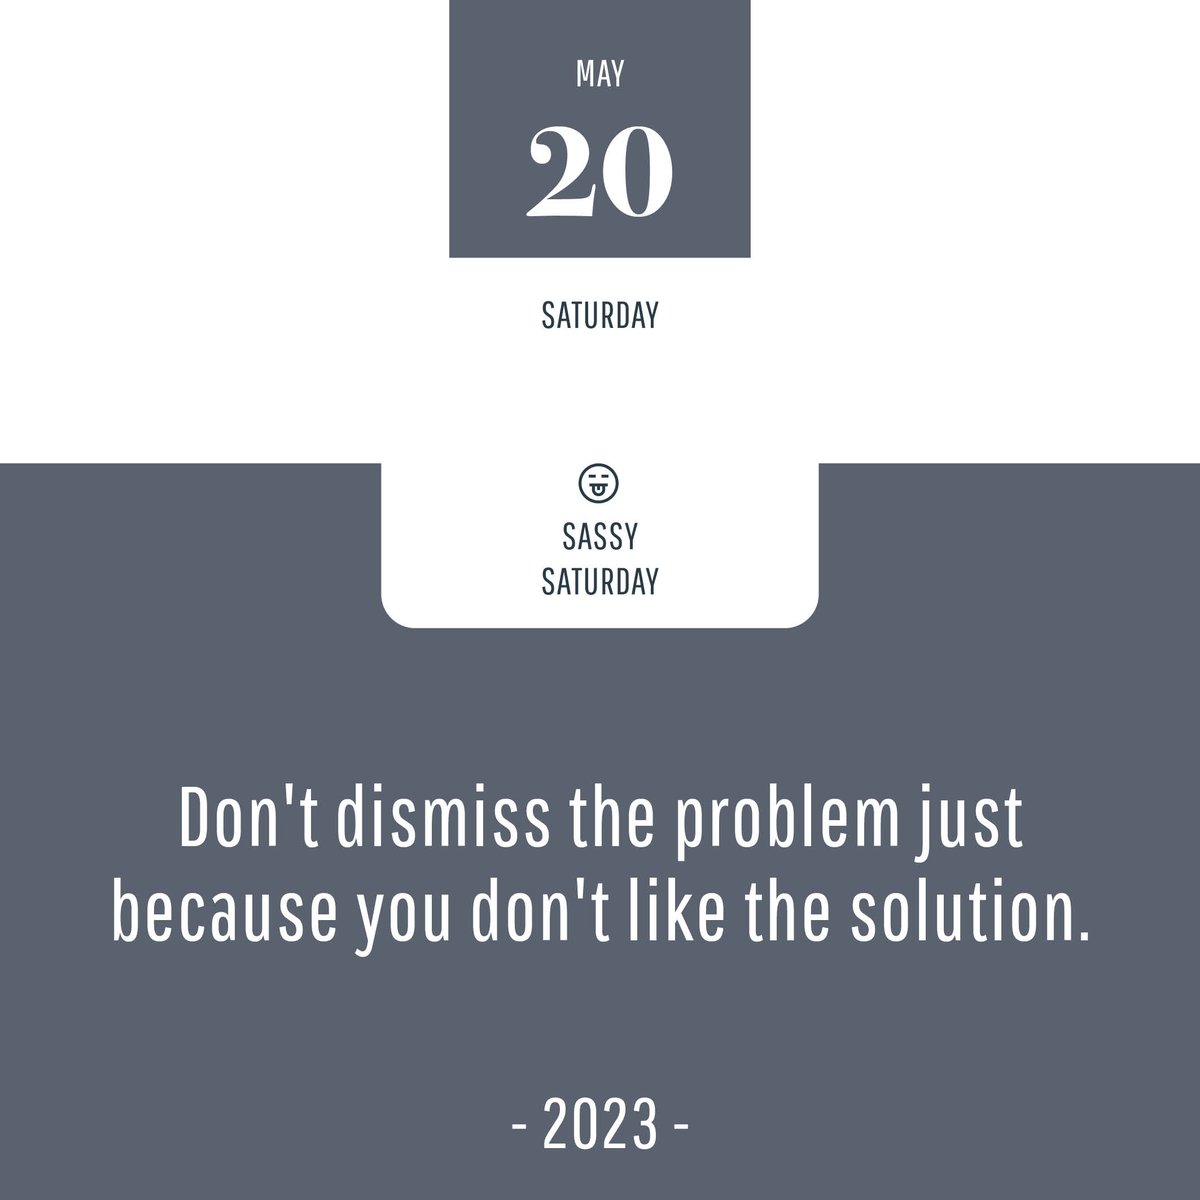 Some sassy Saturday advice 😜

#SassySaturday#AdviceoftheDay #ThinkingOutLoud  #ZenHard #ZenHardNonprofit